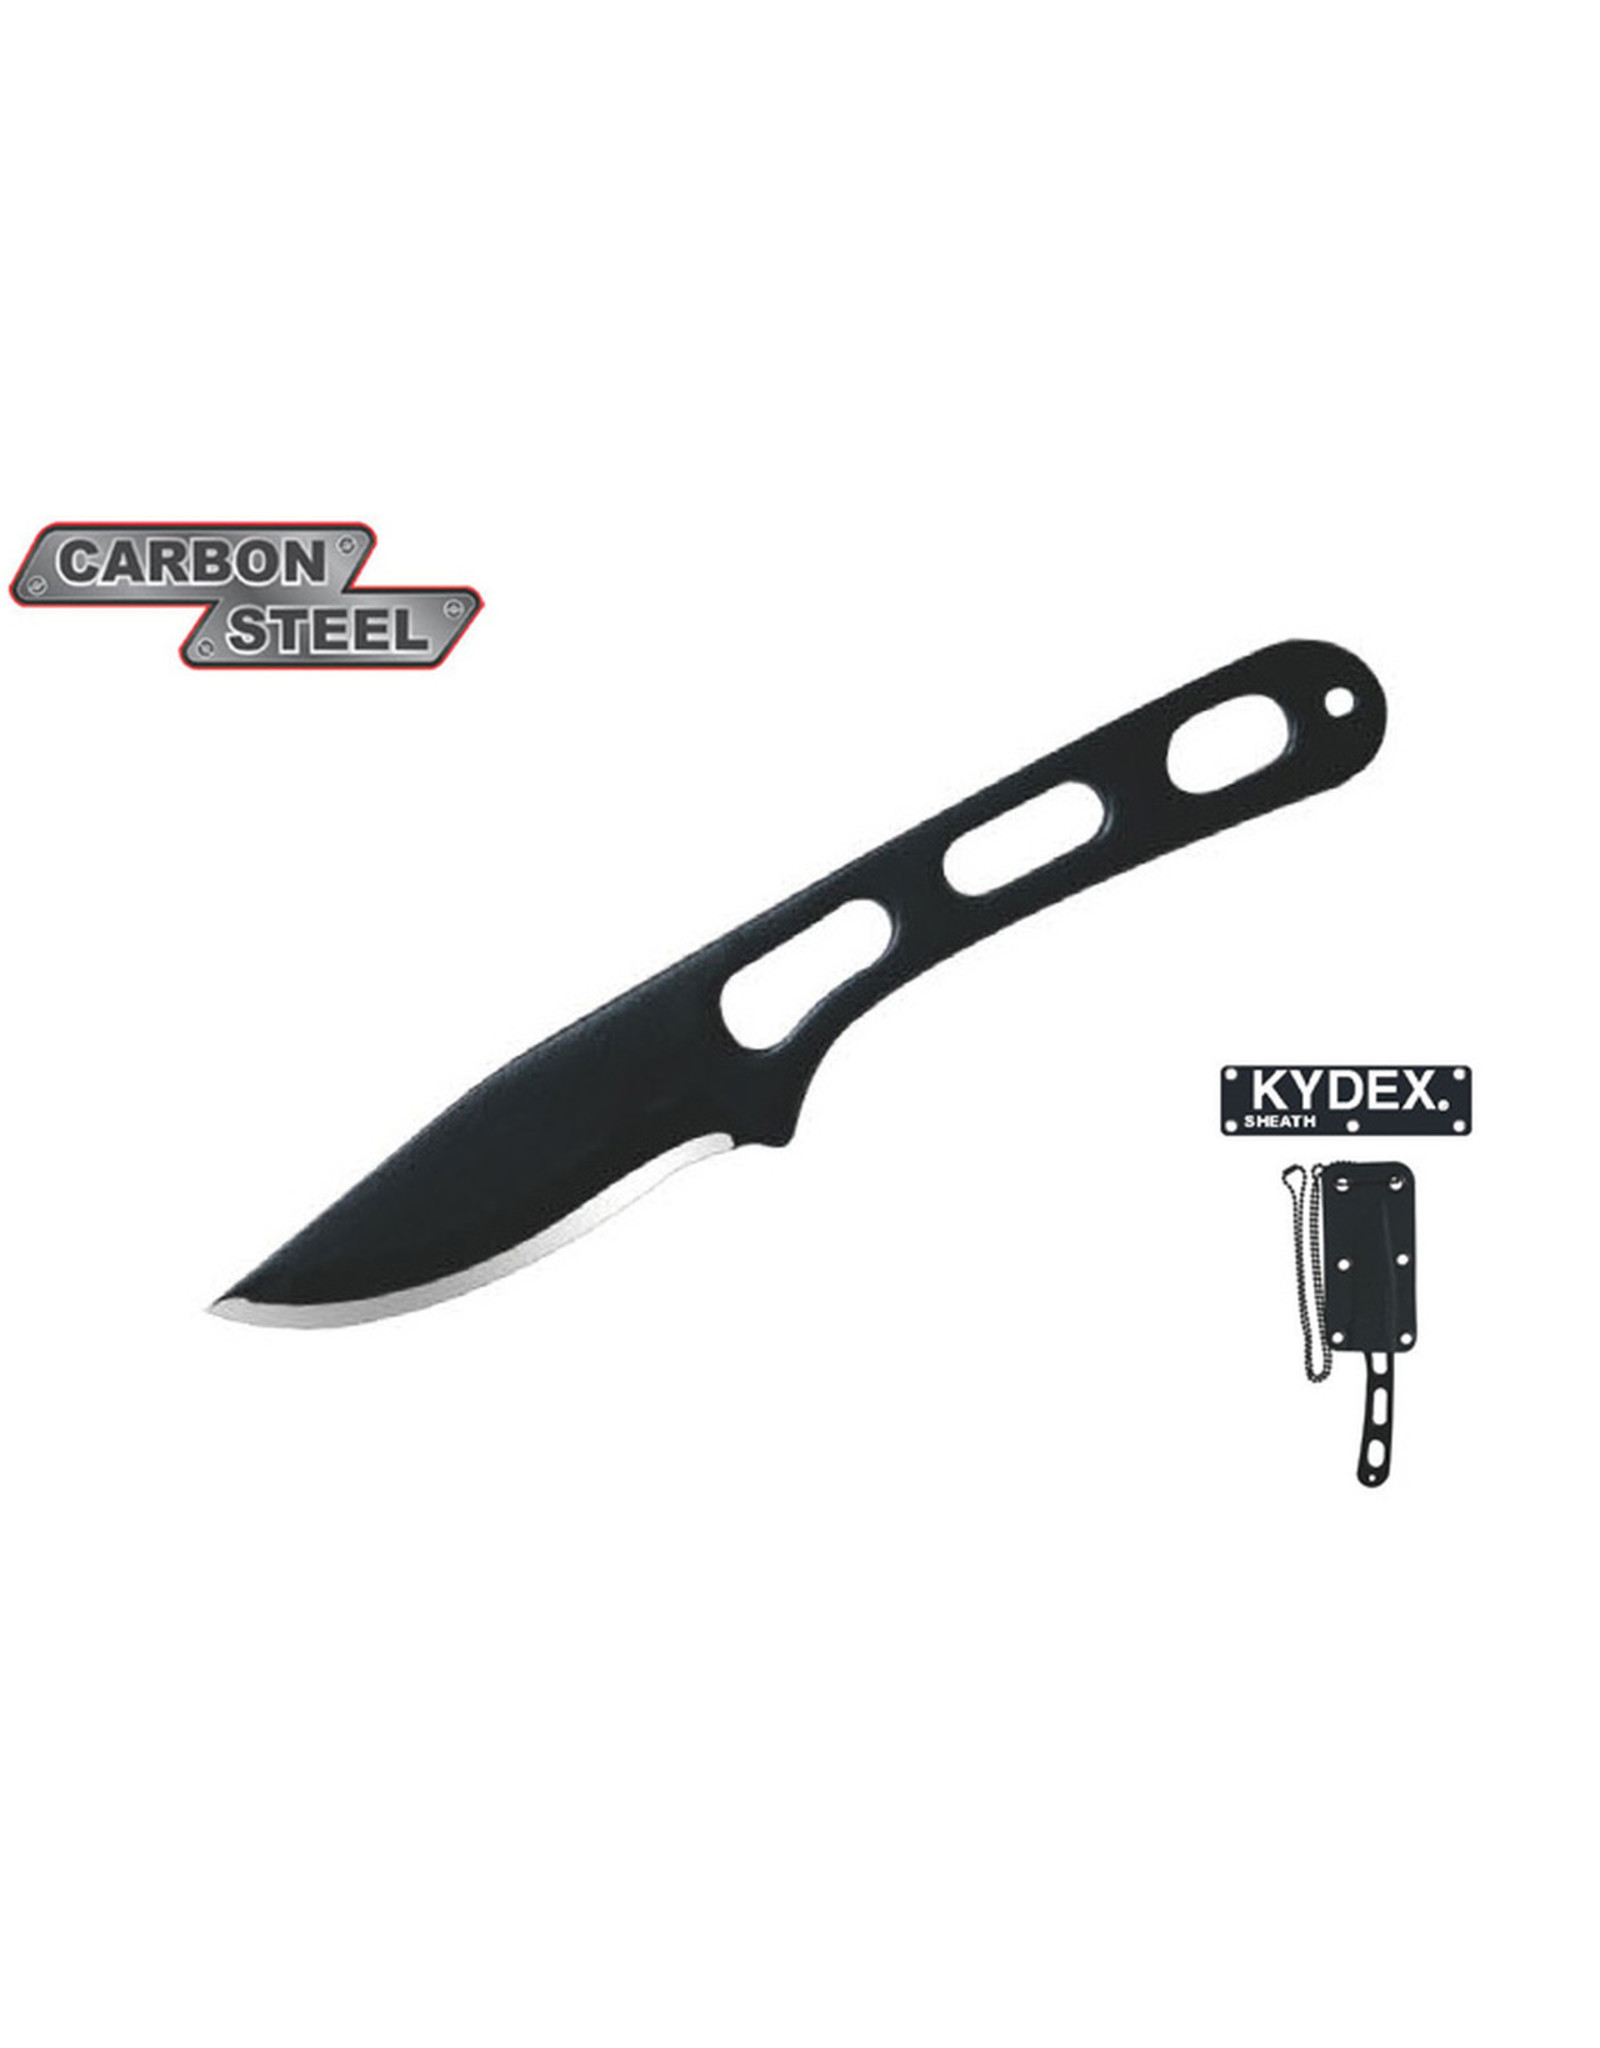 CONDOR 1075 HIGH CARBON NECK KNIFE WITH KYDEX SHEATH